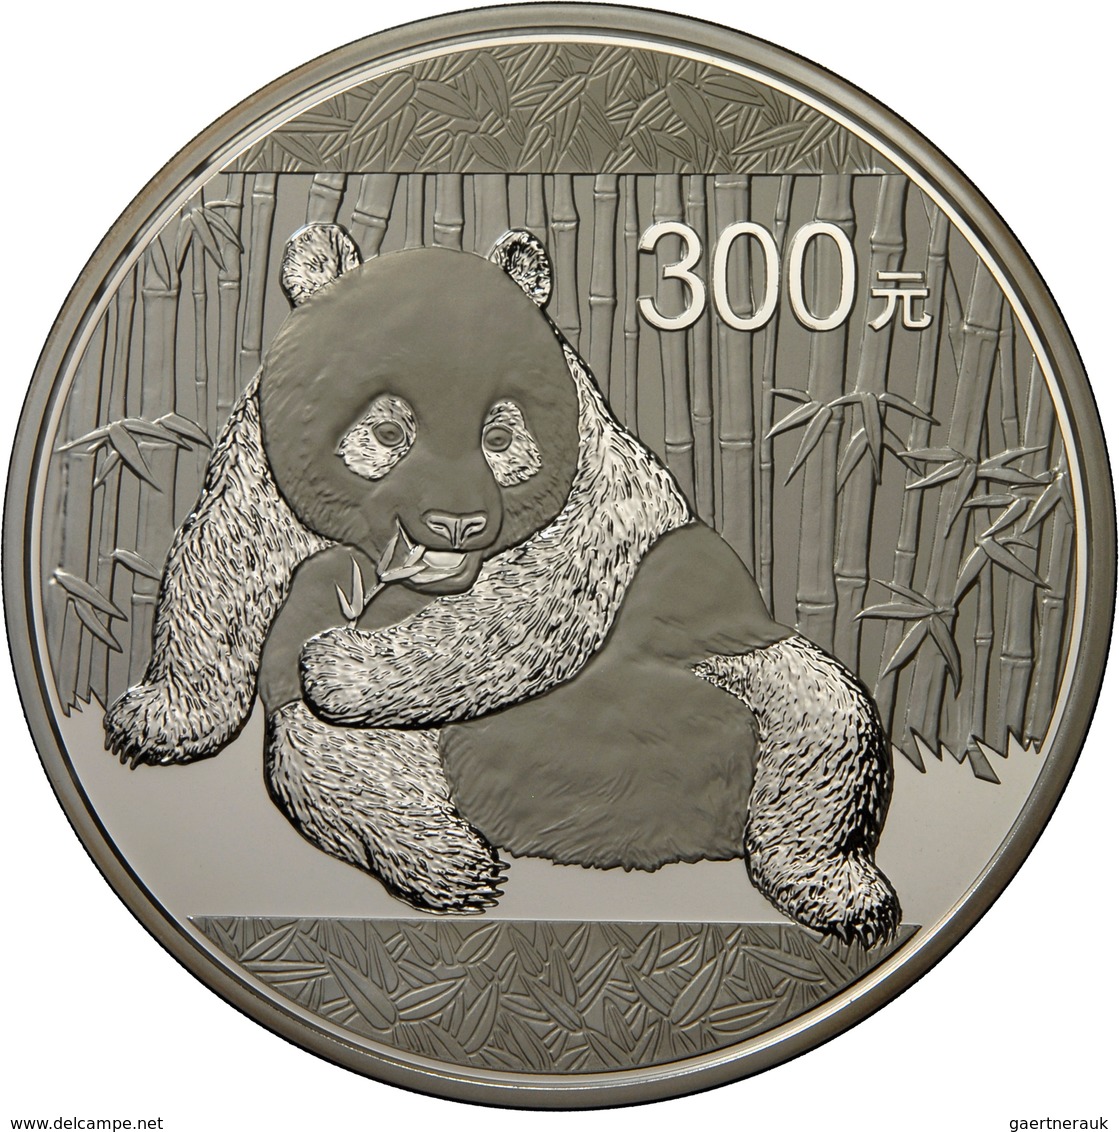 China - Volksrepublik: 300 Yuan 2015, Silber Panda, 1 Kg 999/1000 Silber. Inklusive Zertifikat, Etui - Chine